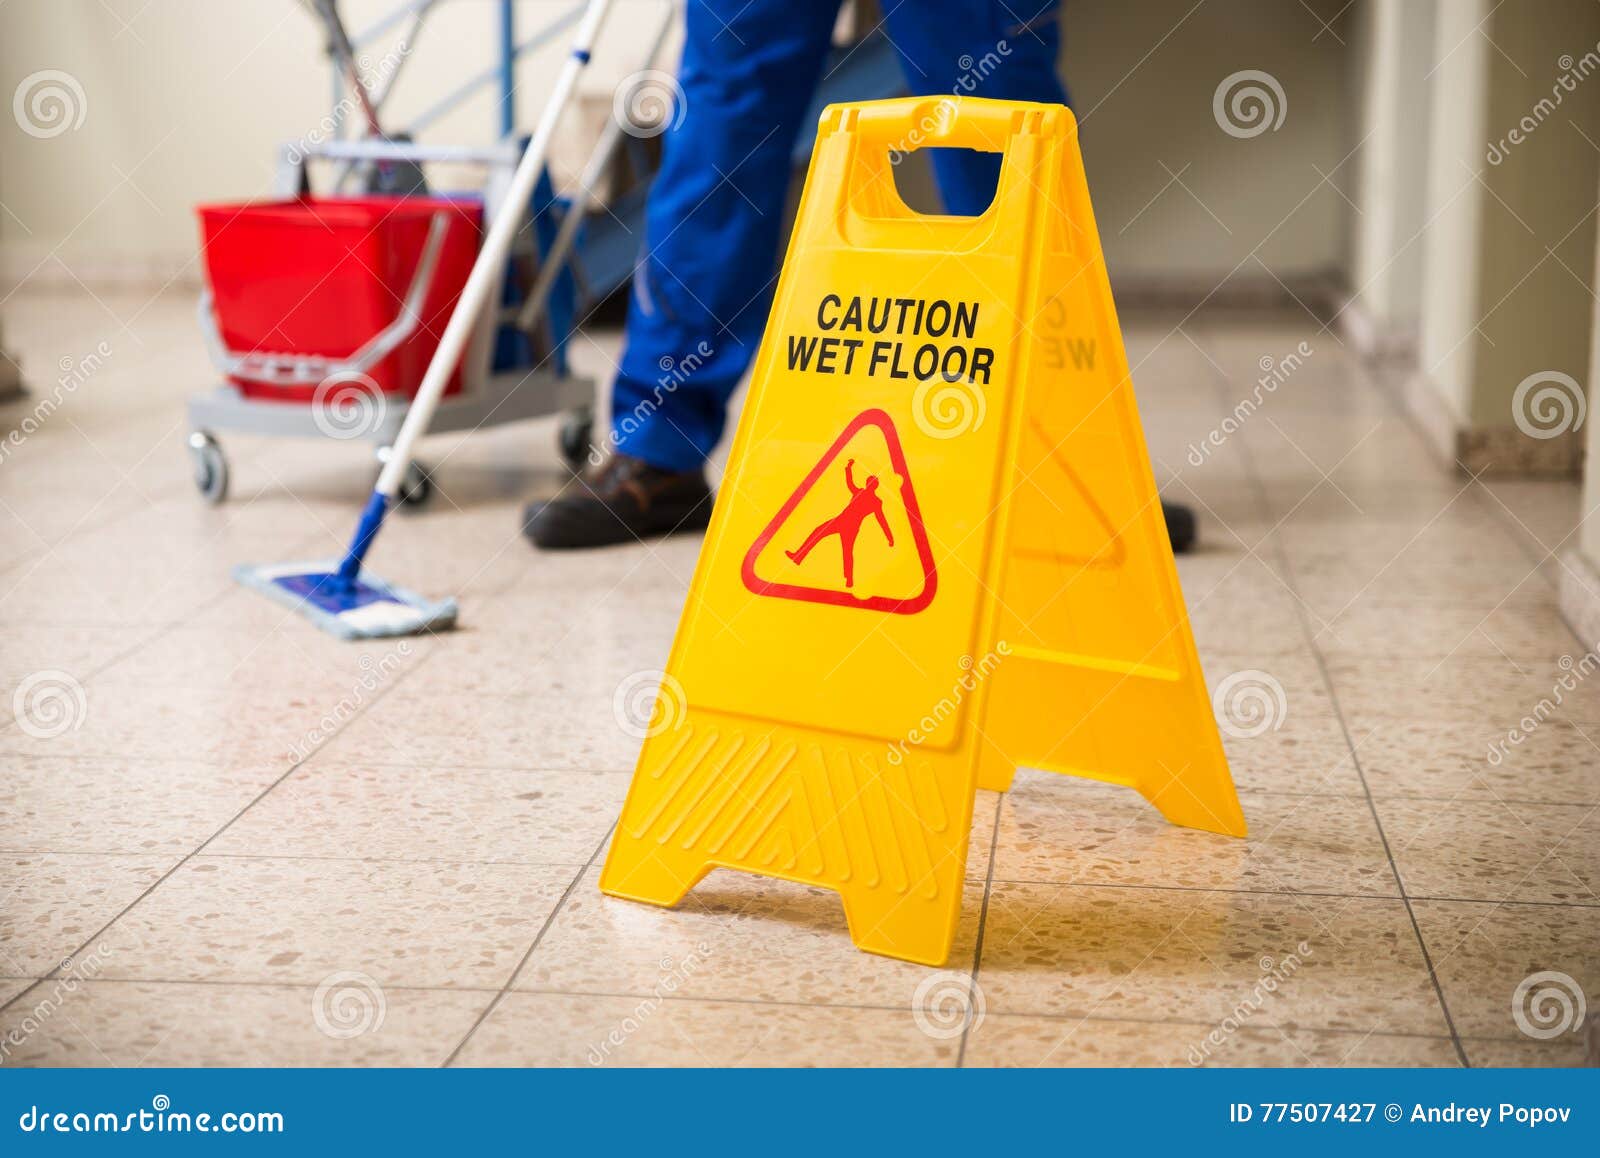 worker mopping floor with wet floor caution sign